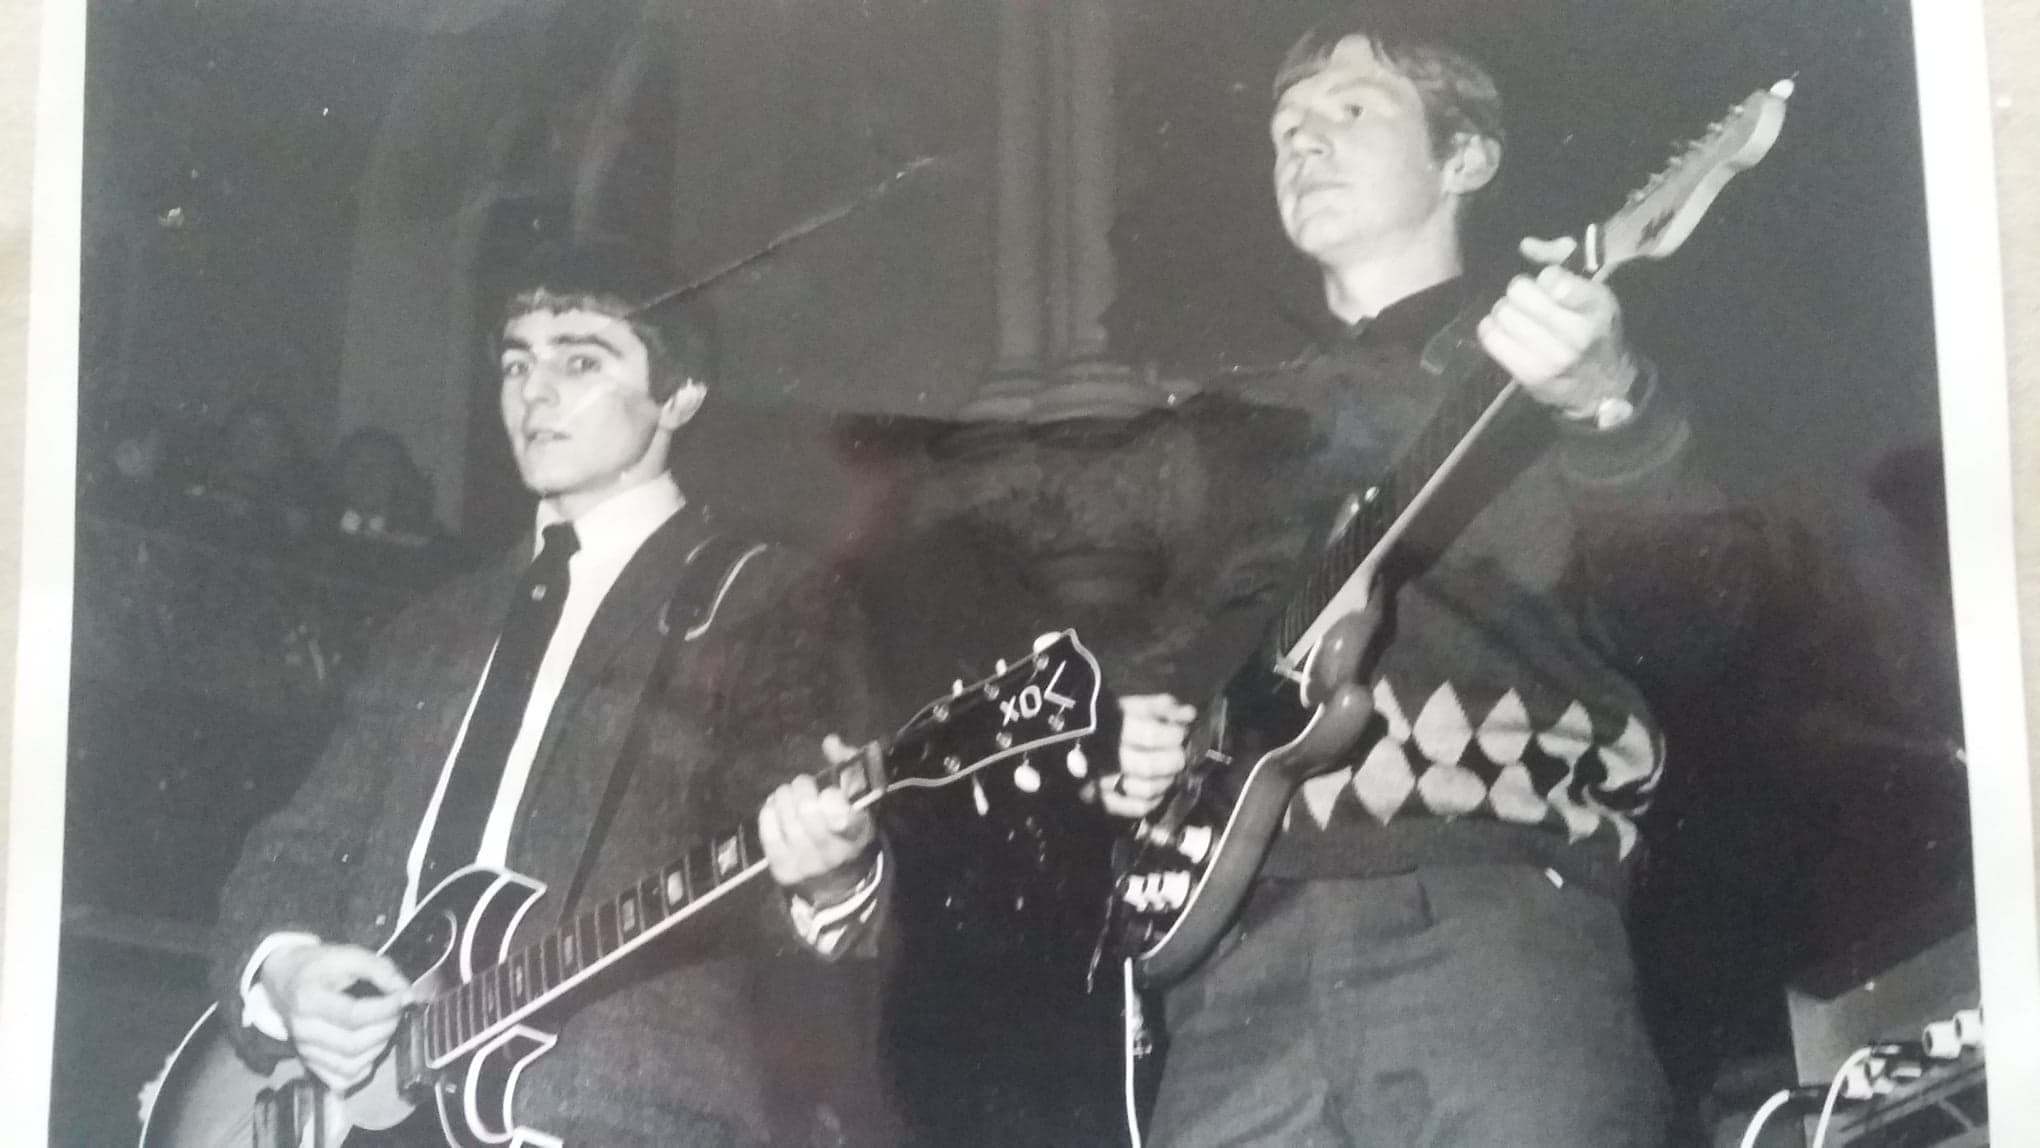 Pete Harris and Brinley Cox in December 1965